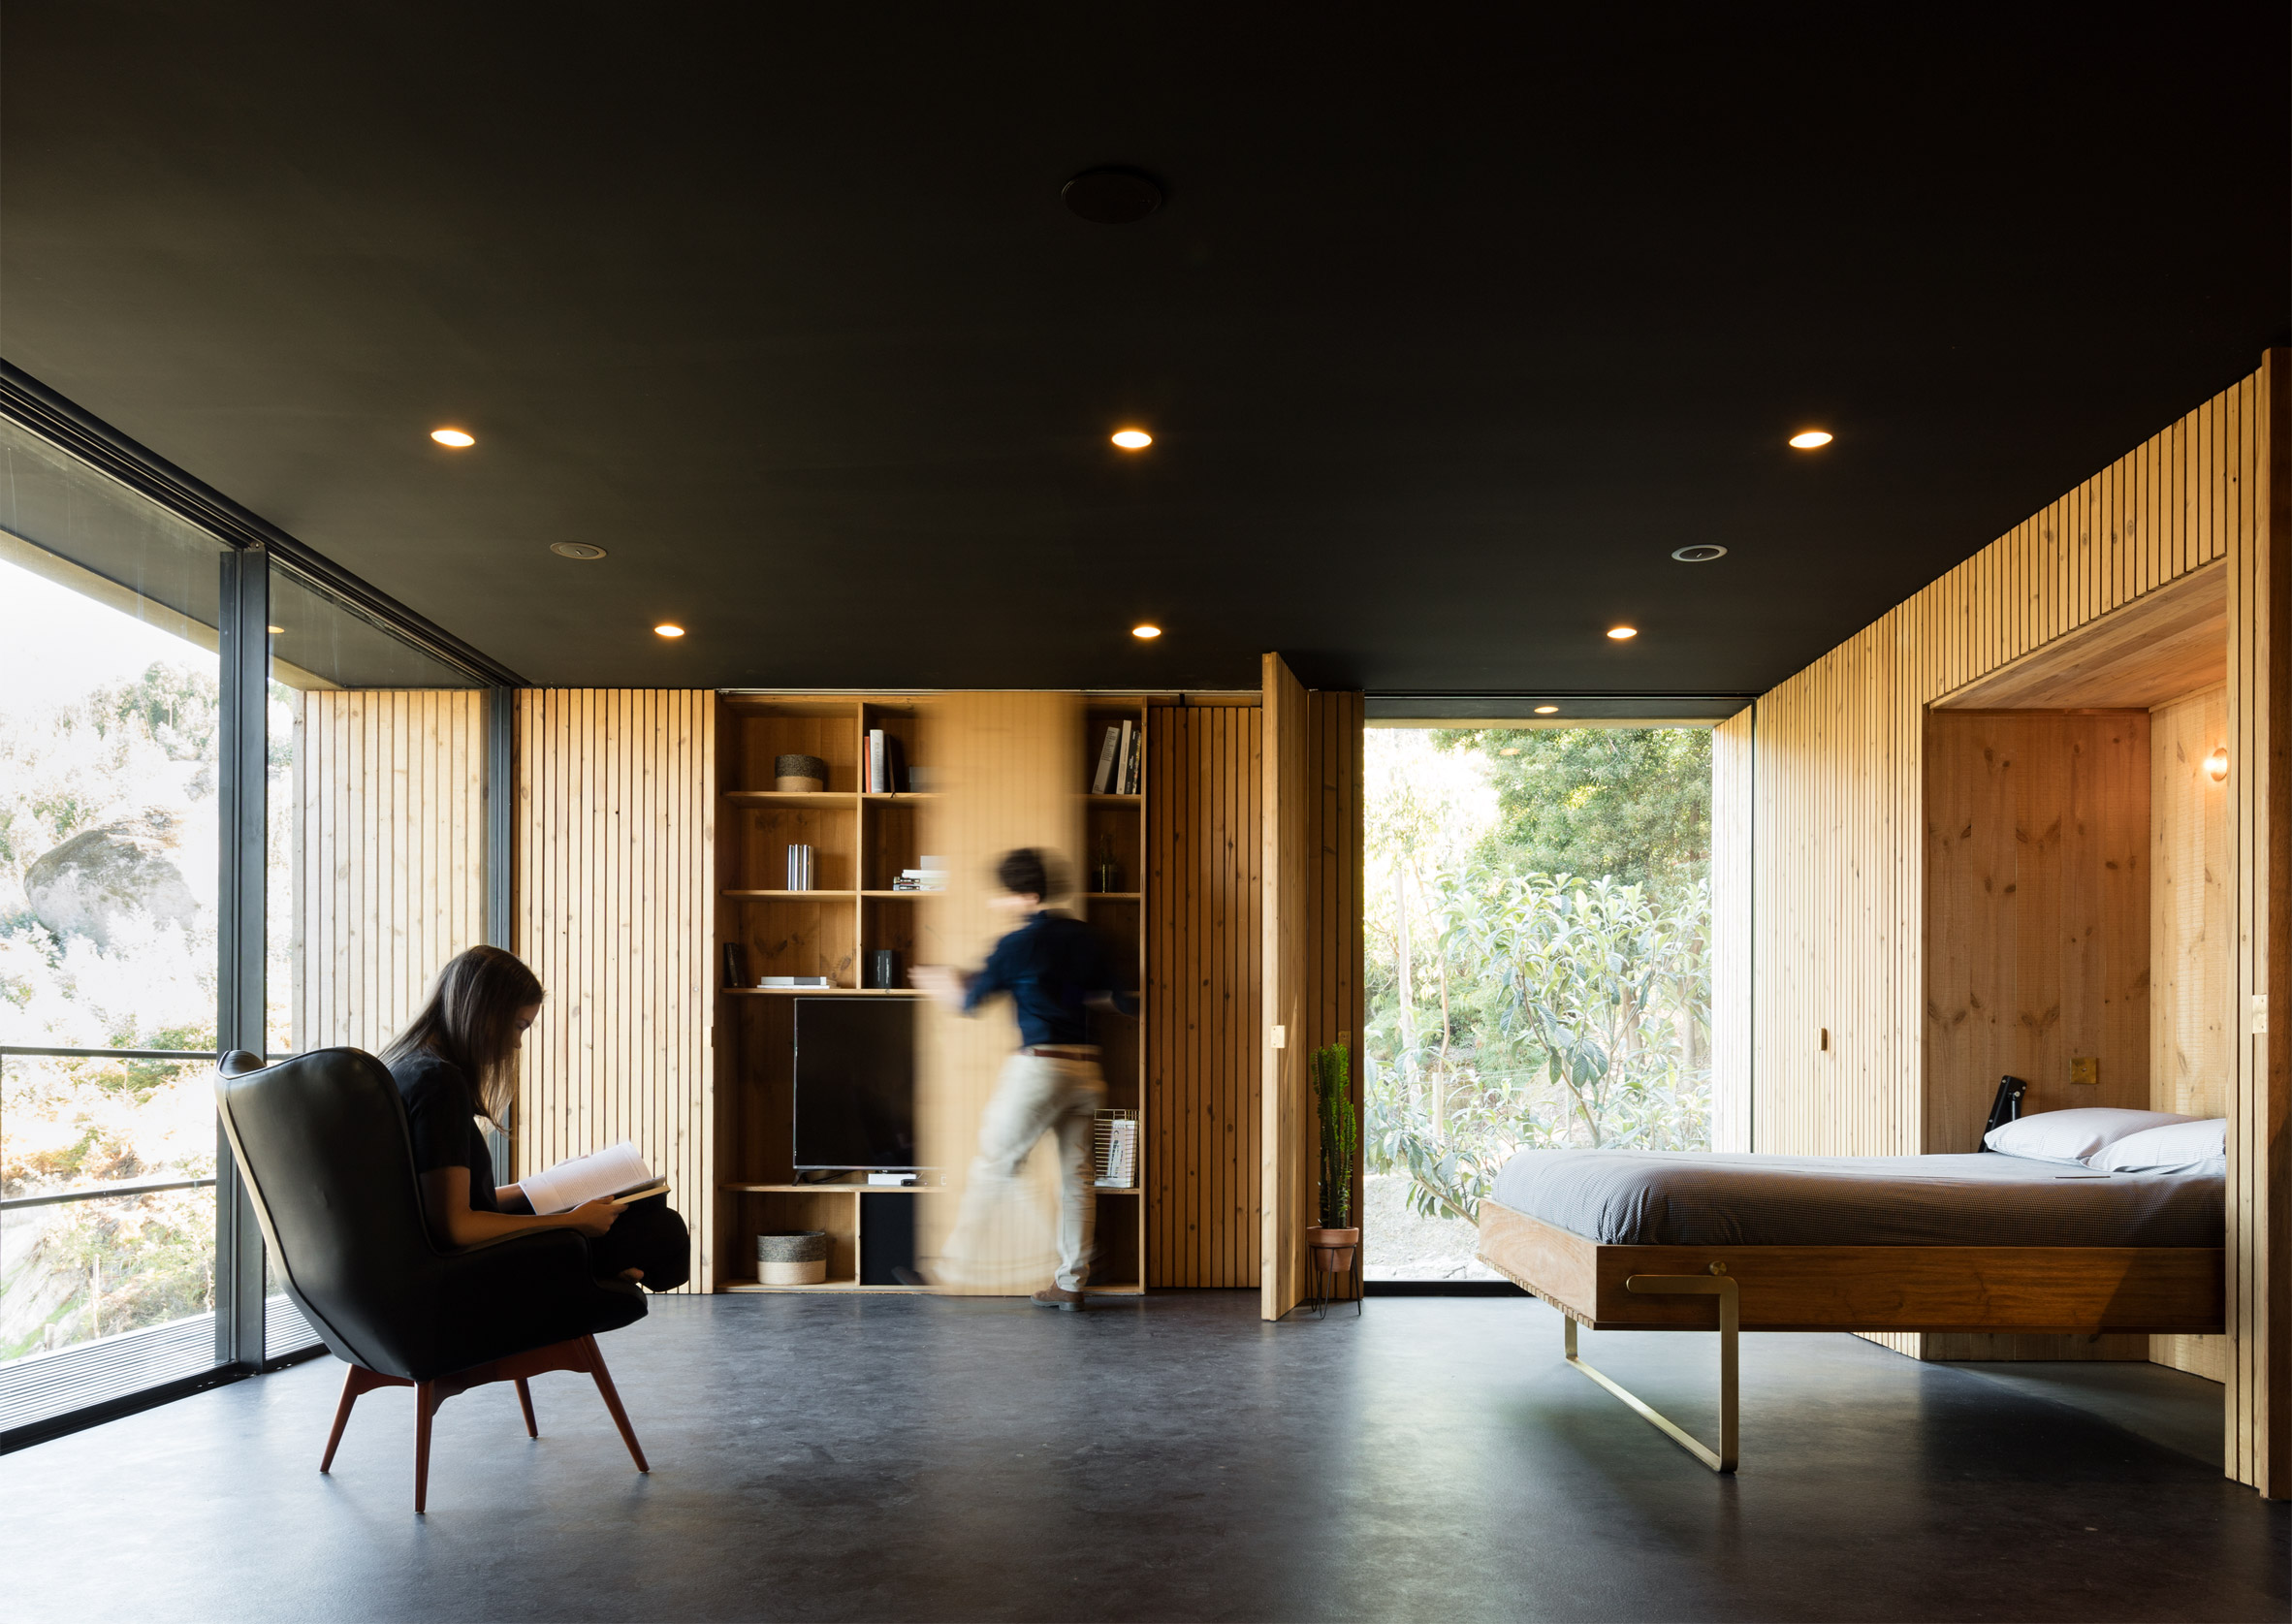  Pavilion House by Andreia Garcia Architectural Affairs + Diogo Aguiar Studio